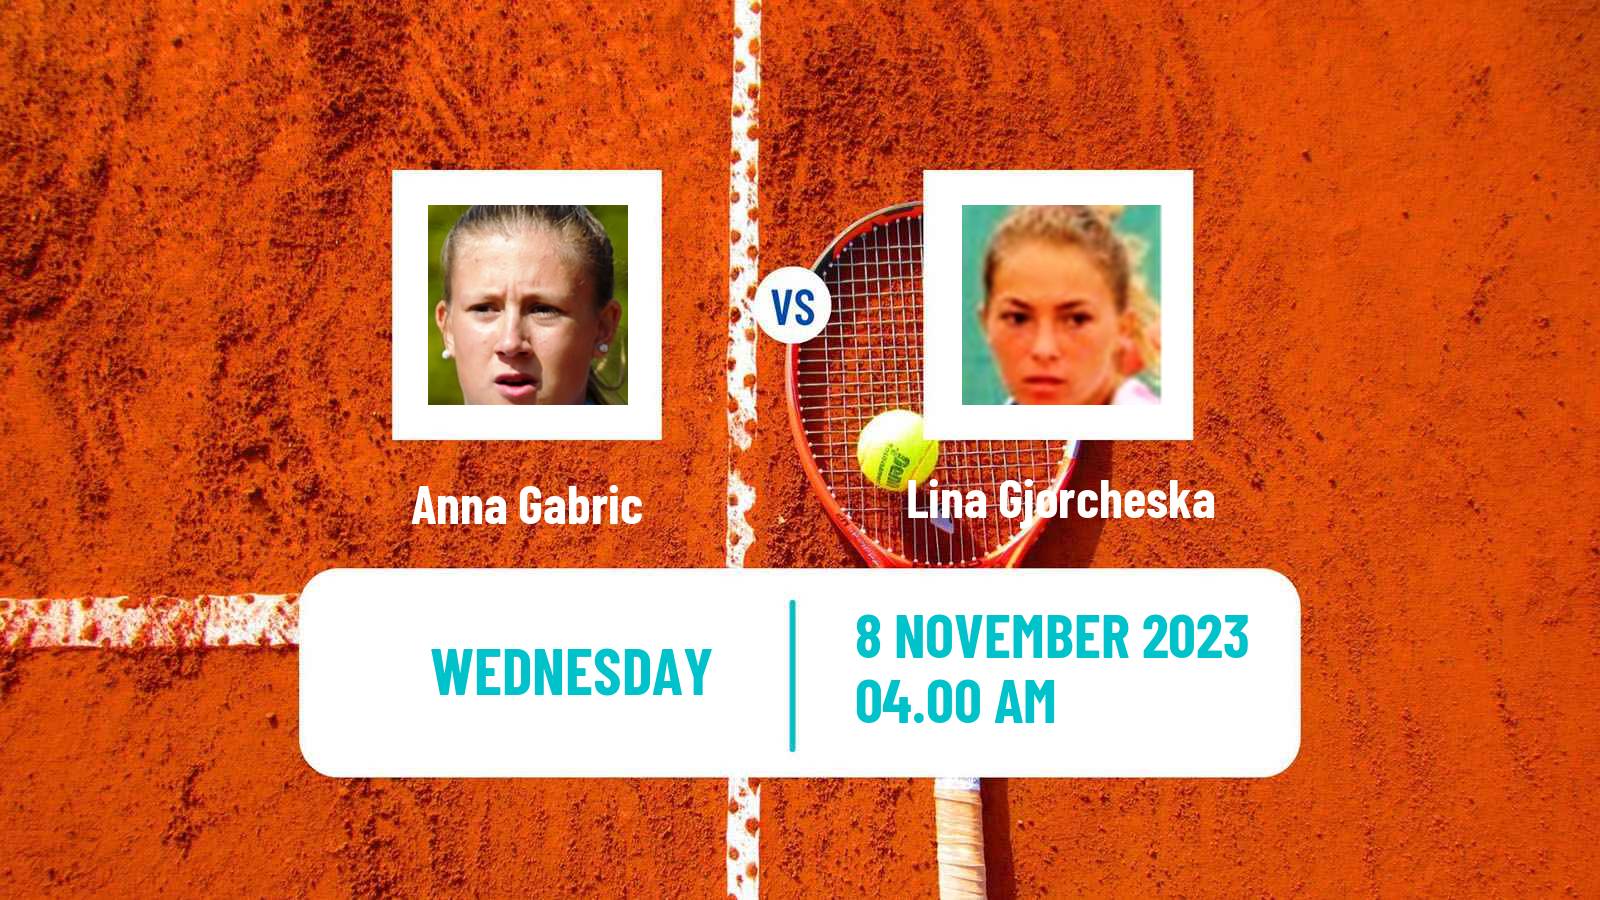 Tennis ITF W40 Heraklion 2 Women Anna Gabric - Lina Gjorcheska